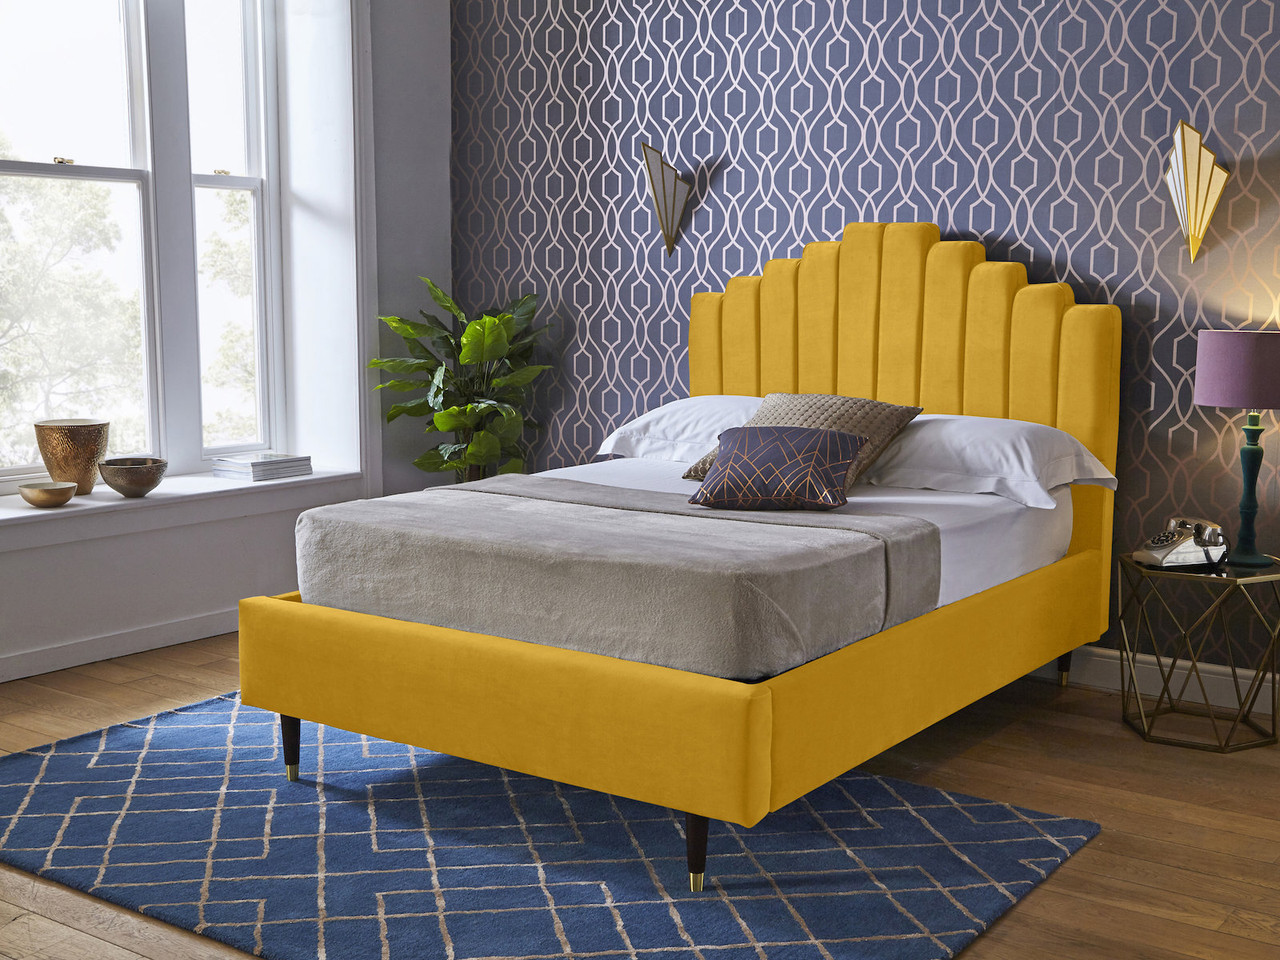 Hemingway Upholstered Ottoman Bed Frame in Turmeric Mustard Yellow